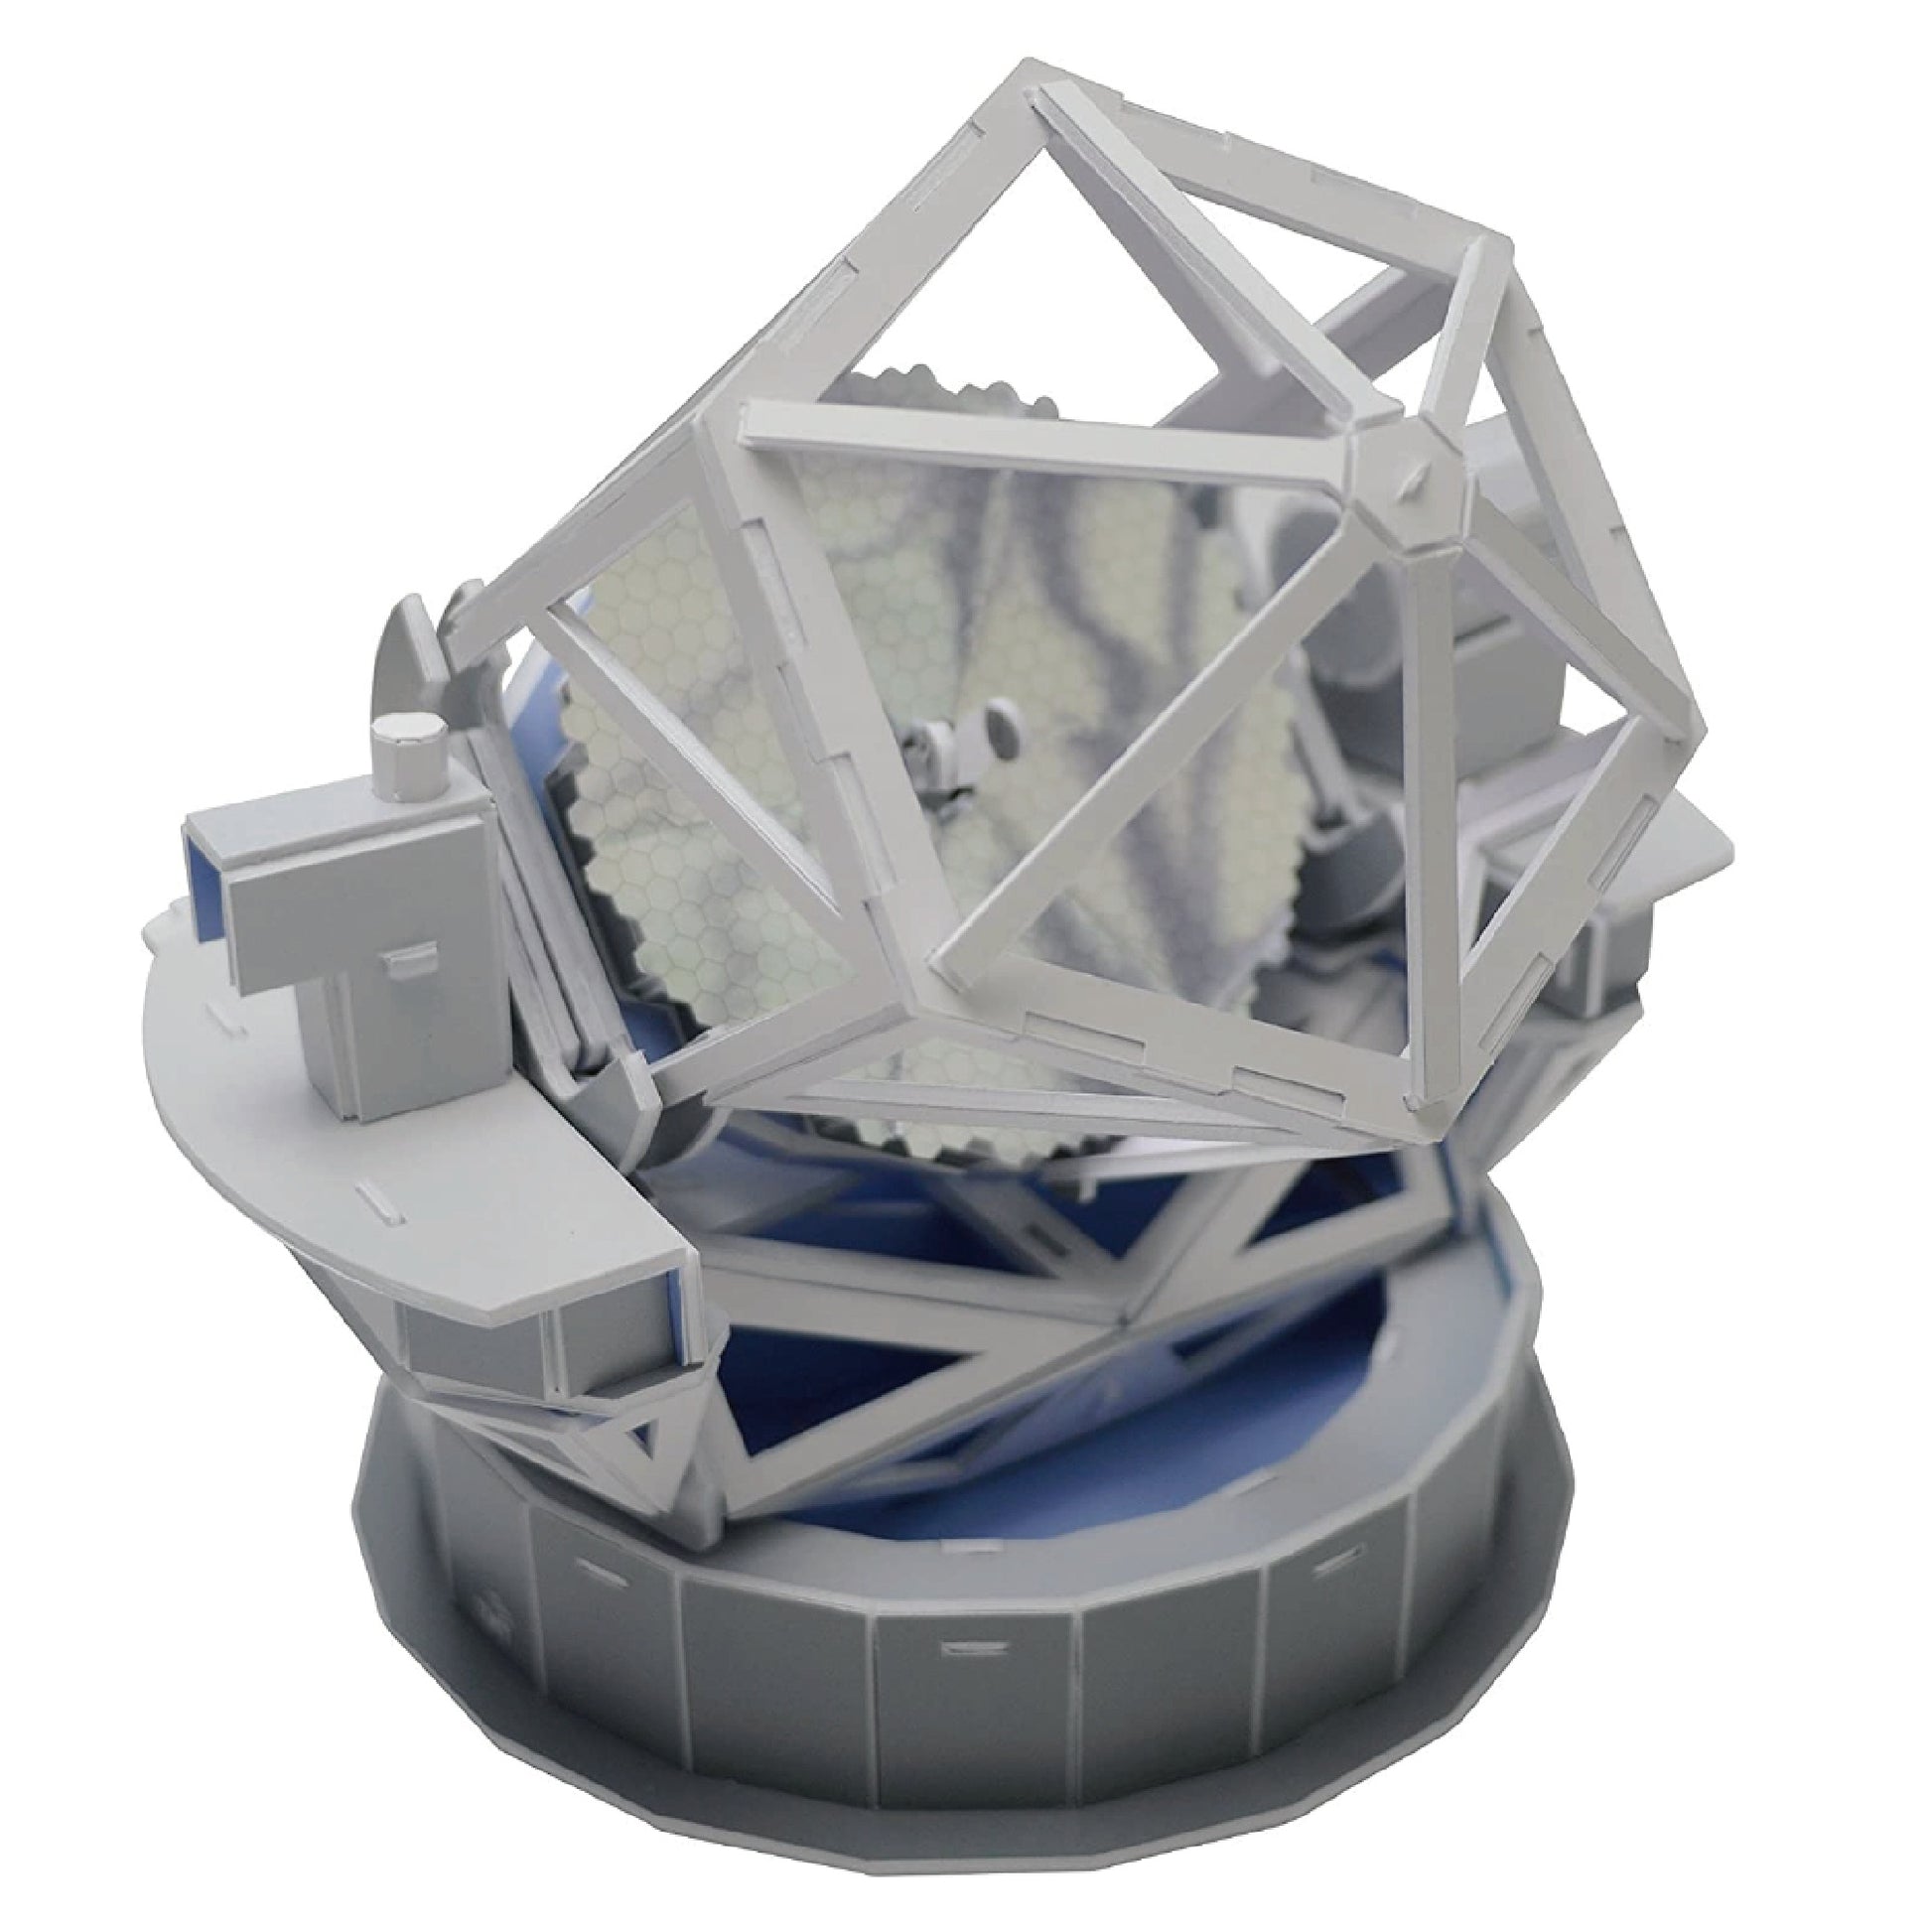  3Dパズル  工作キット 次世代超大型望遠鏡TMT 02